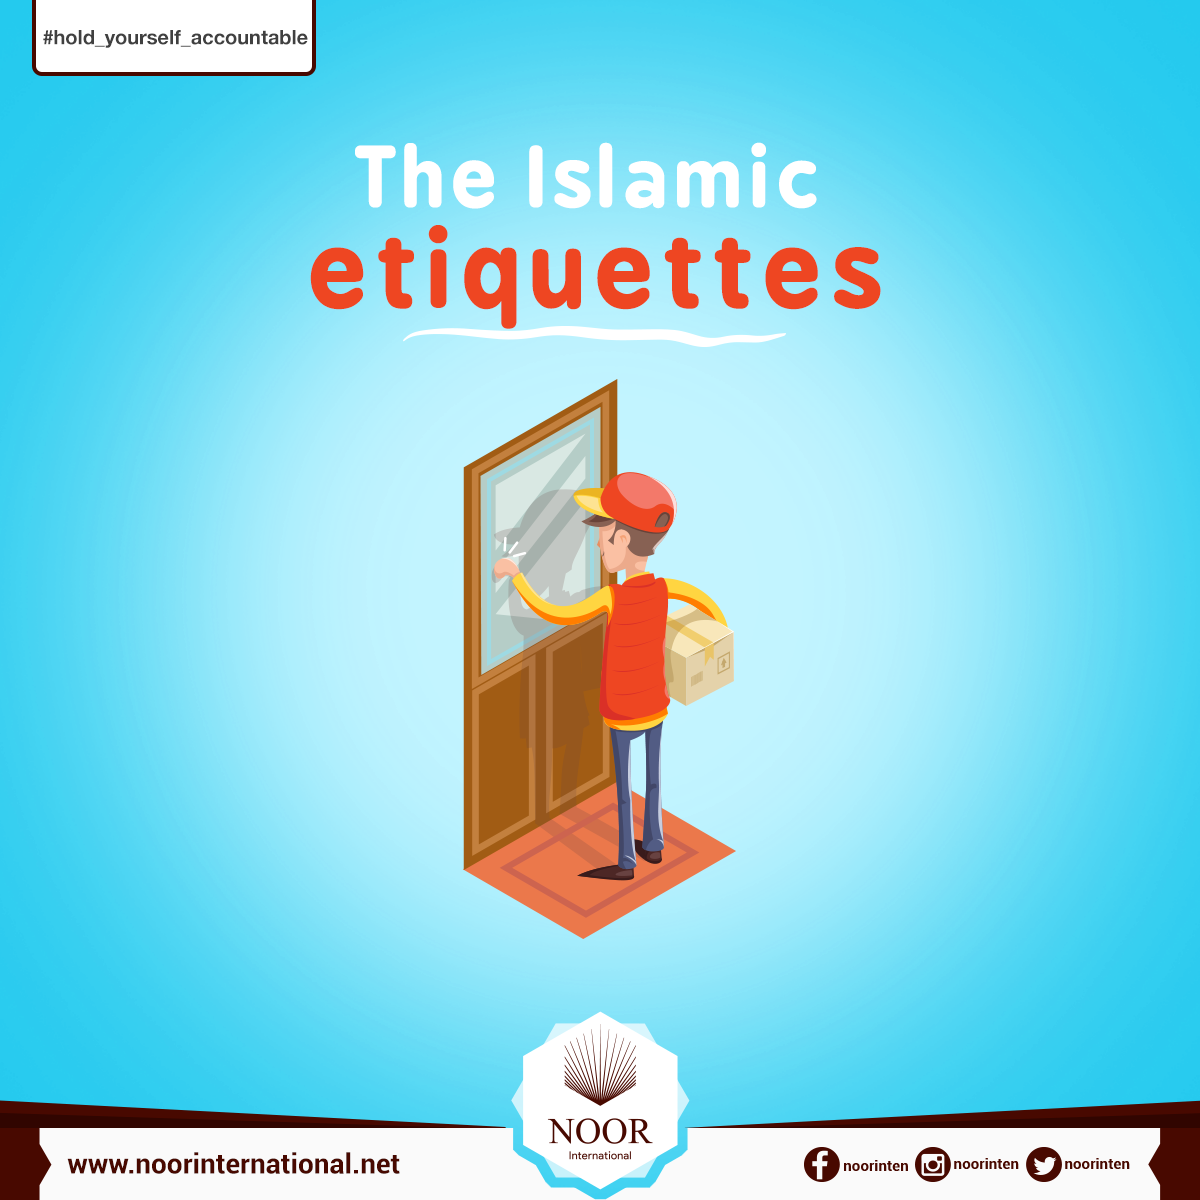 The Islamic etiquettes